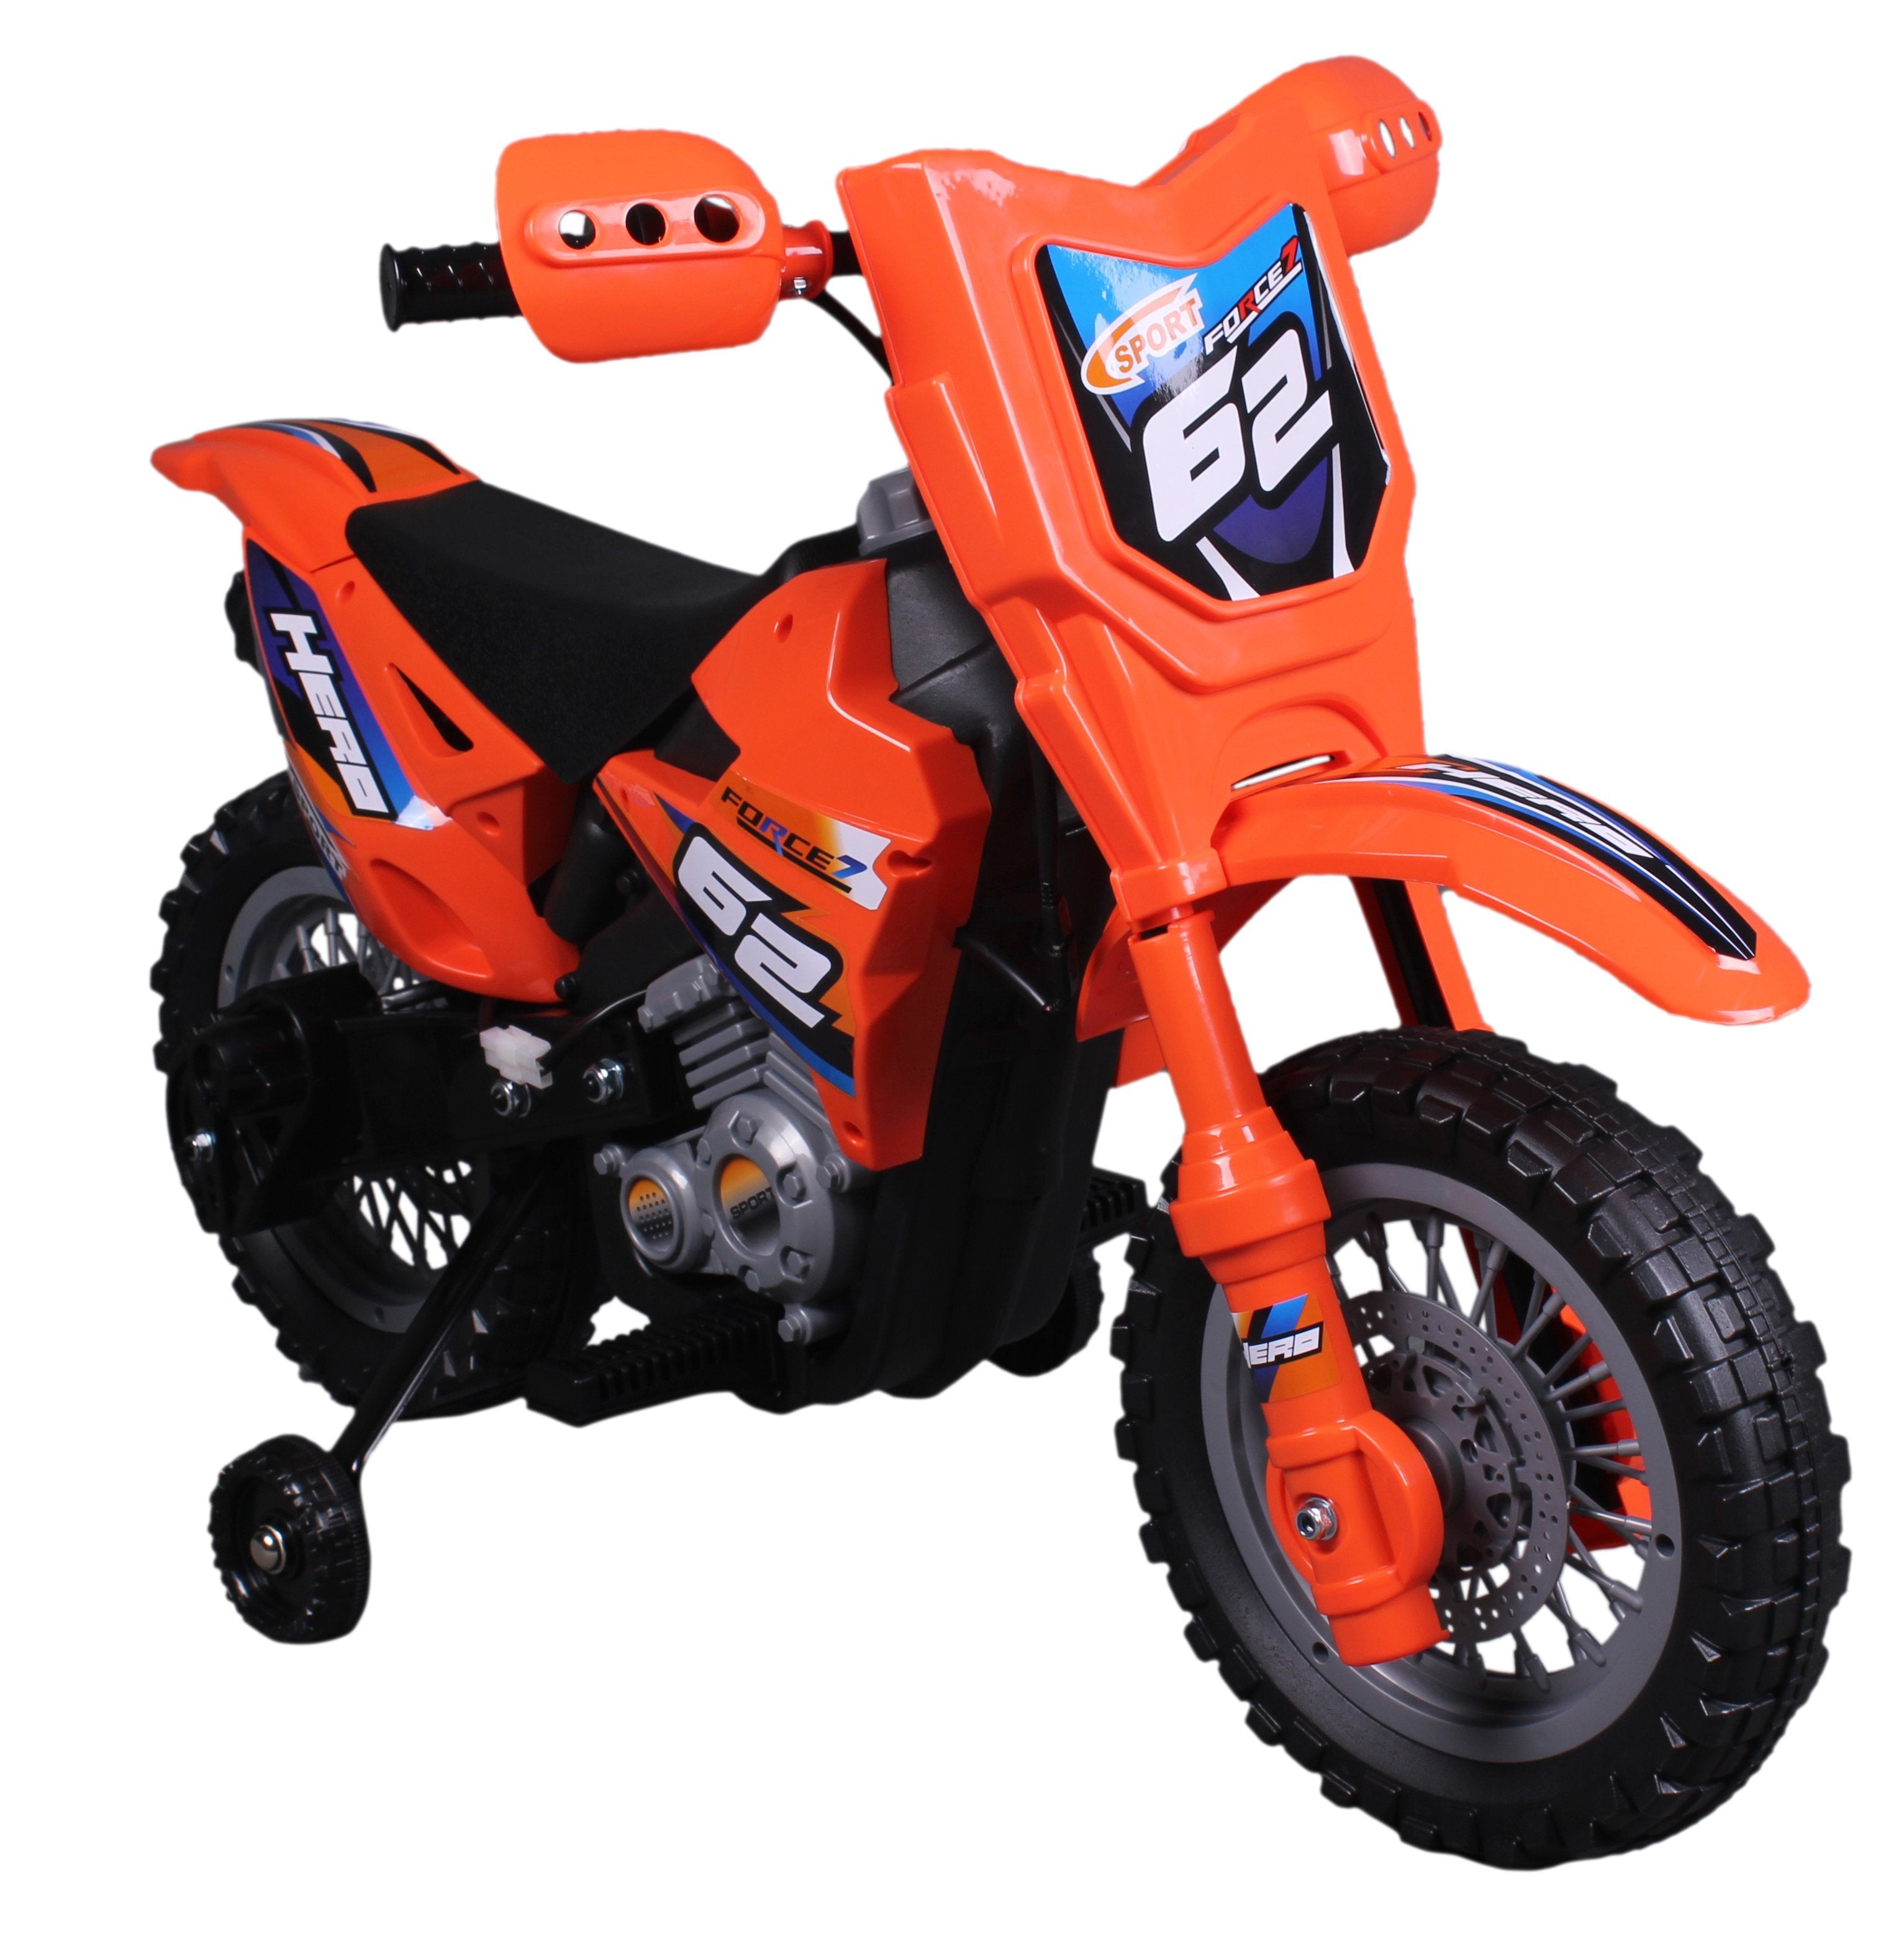 Vroom Rider Vr098 Battery Operated 6v Dirt Bike (orange) - Default